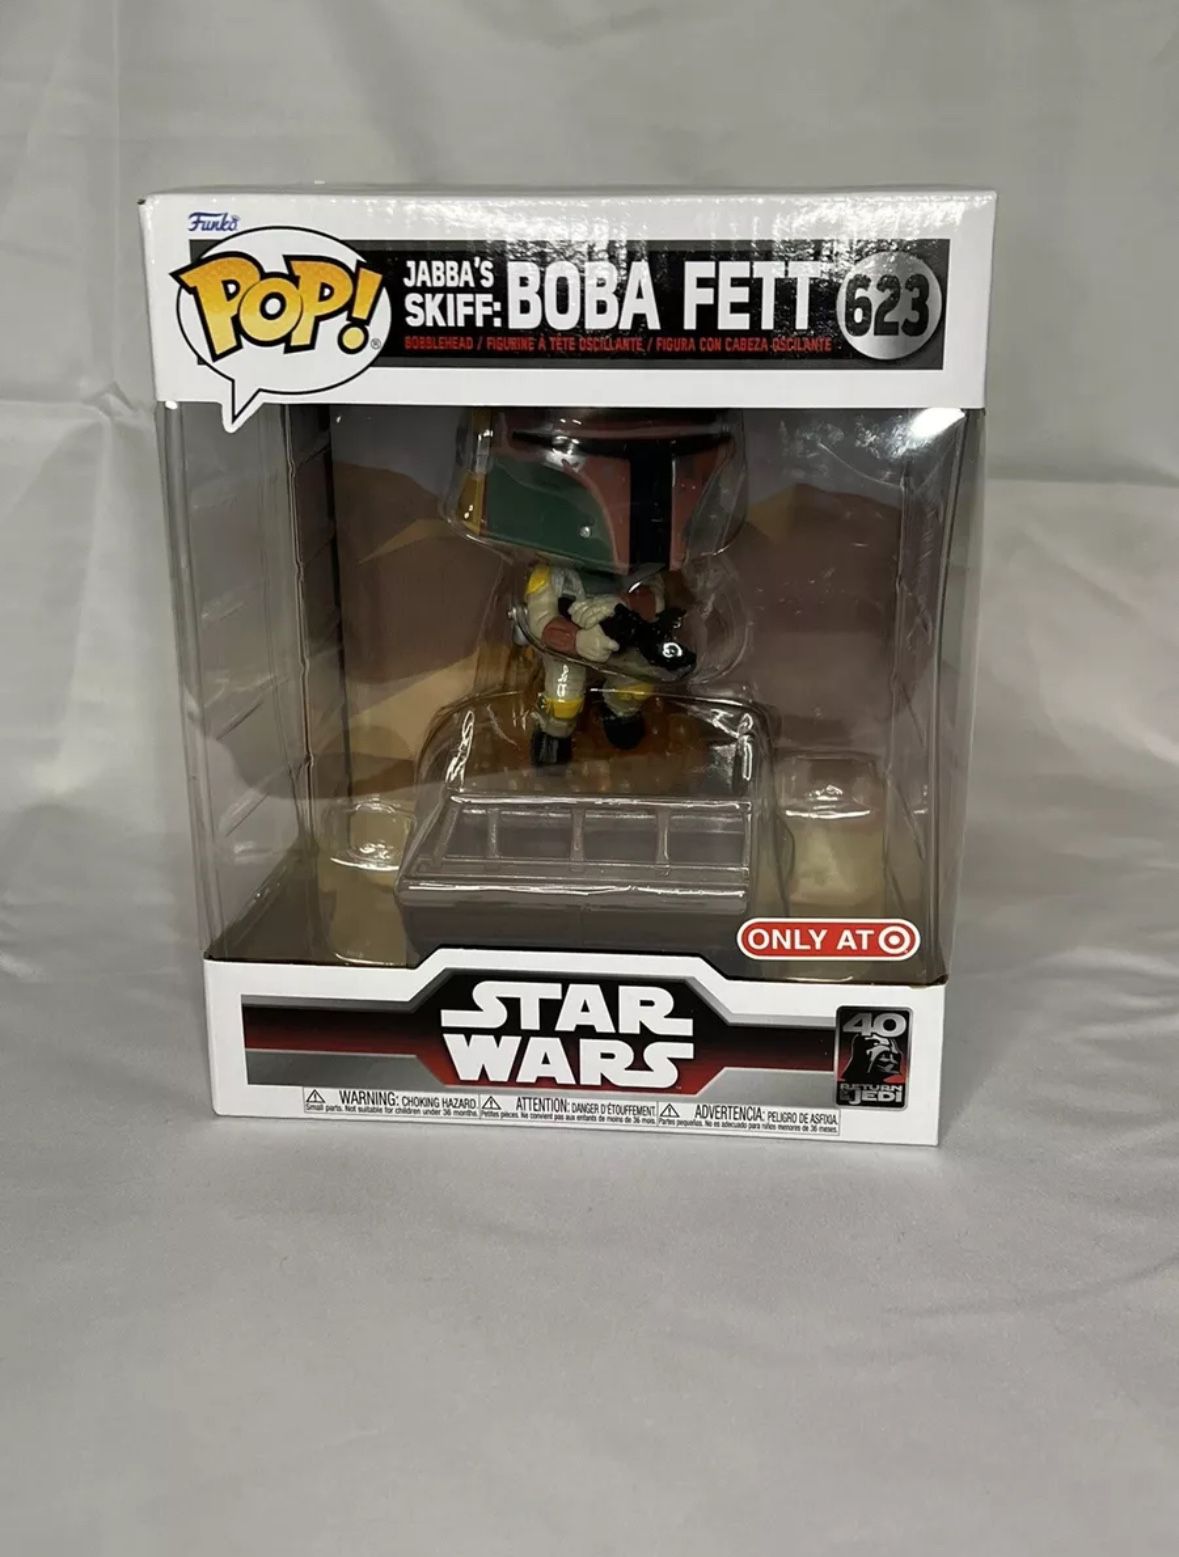 Funko Pop! Vinyl: Star Wars - Jabba’s Skiff: Boba Fett - Target Exclusive